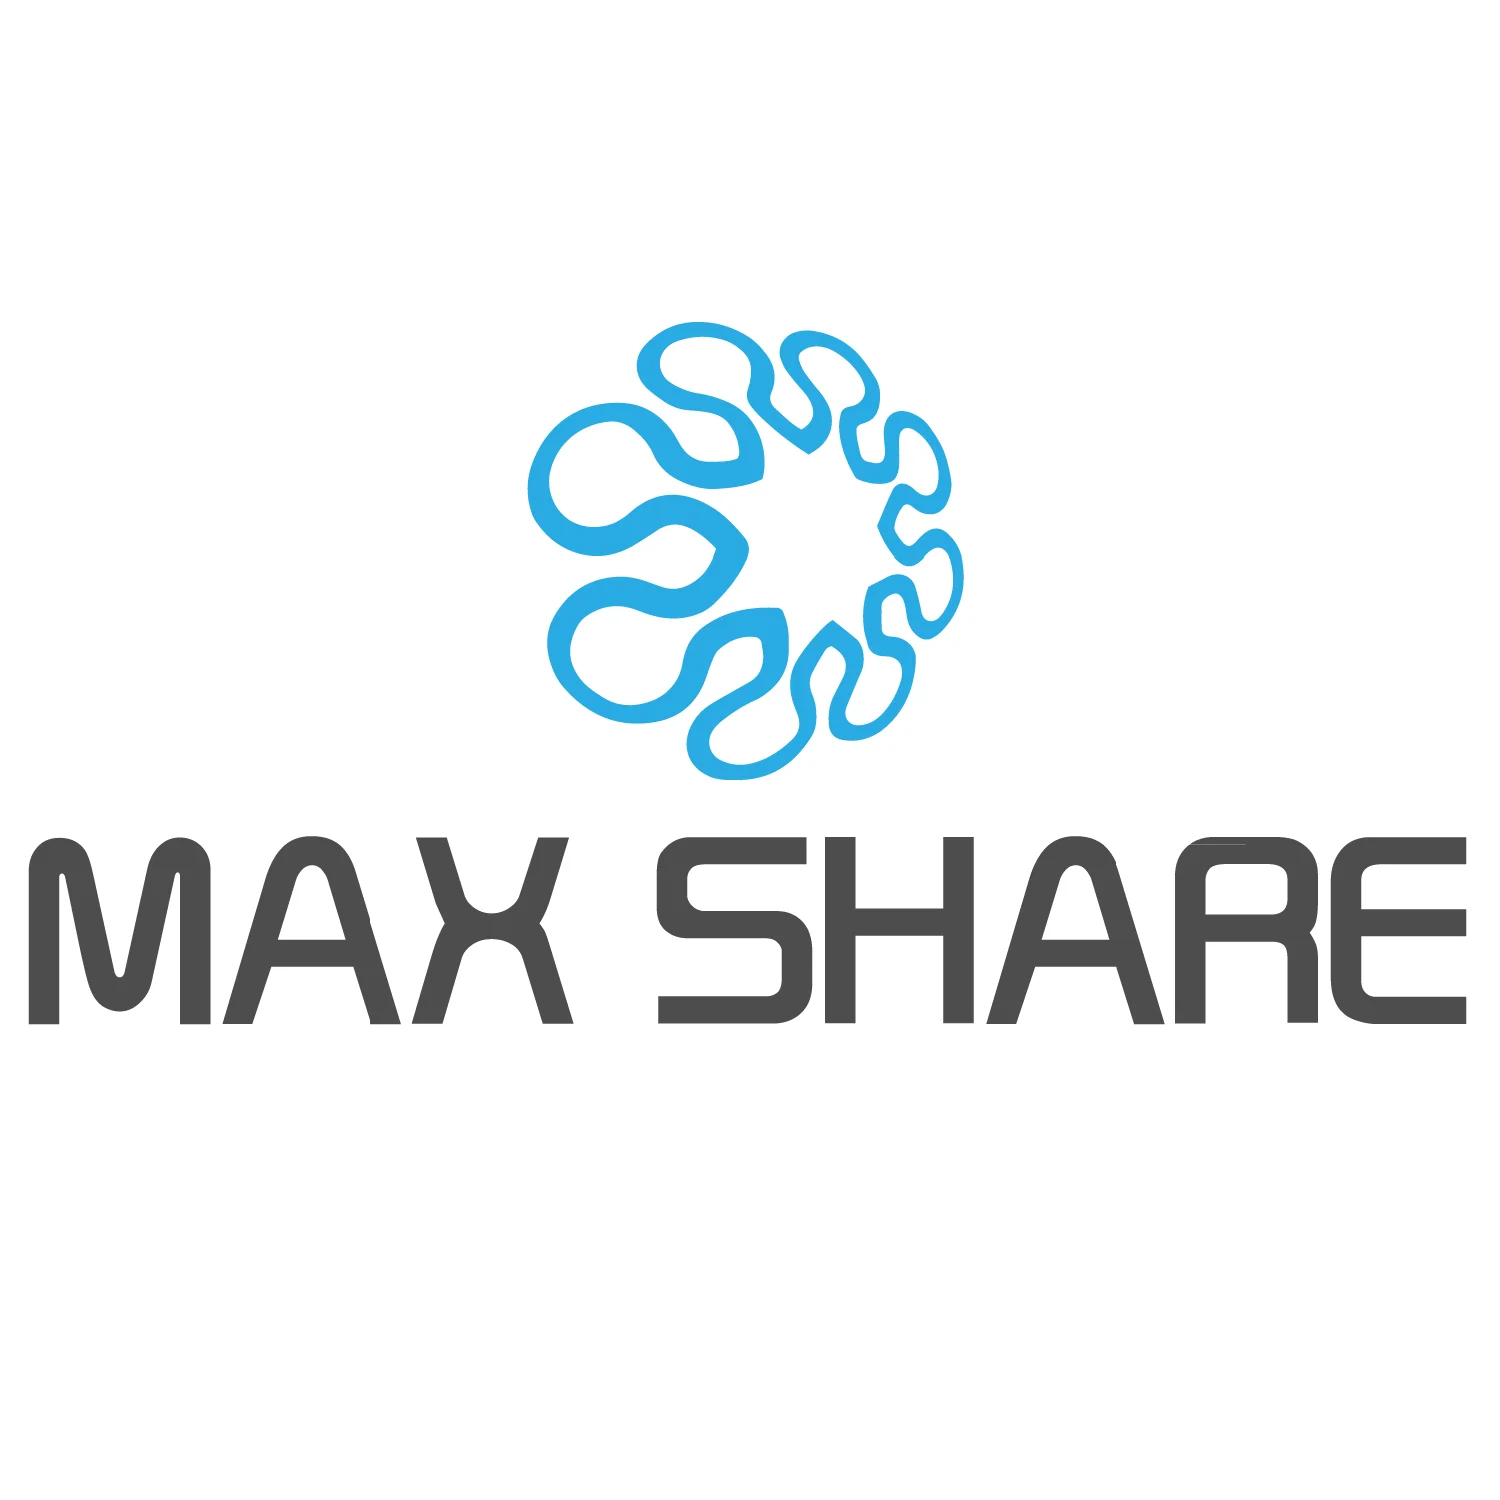 Share max